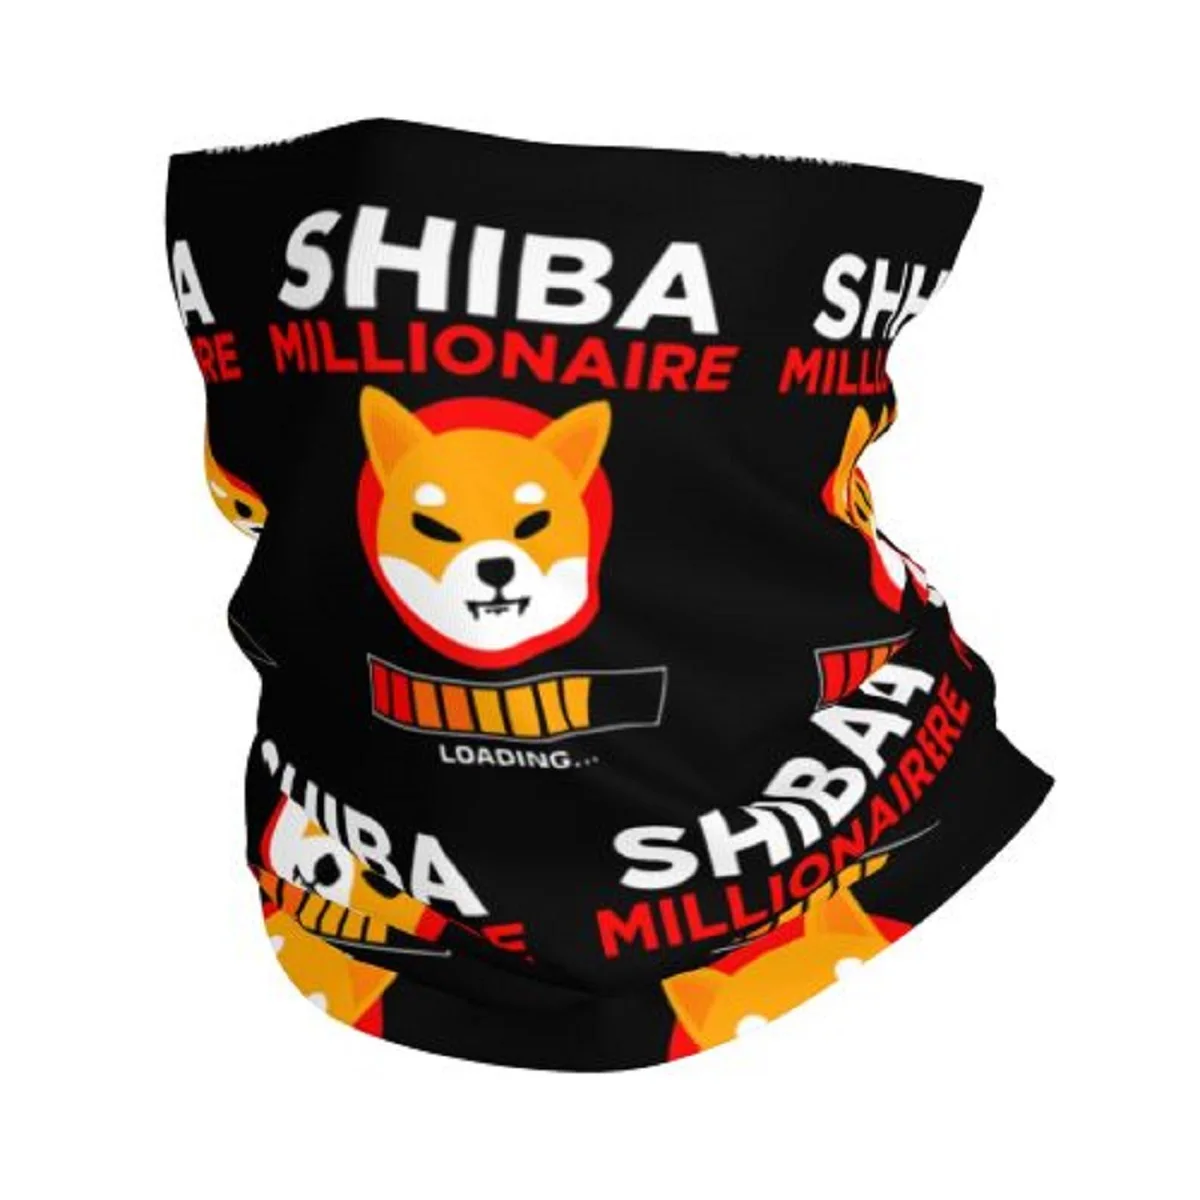 

Shiba Inu Coin Token Shib Army HODL Crypto Bandana Neck Cover SHIB Millionaire Loading Mask Scarf Warm Headwear Outdoor Sports